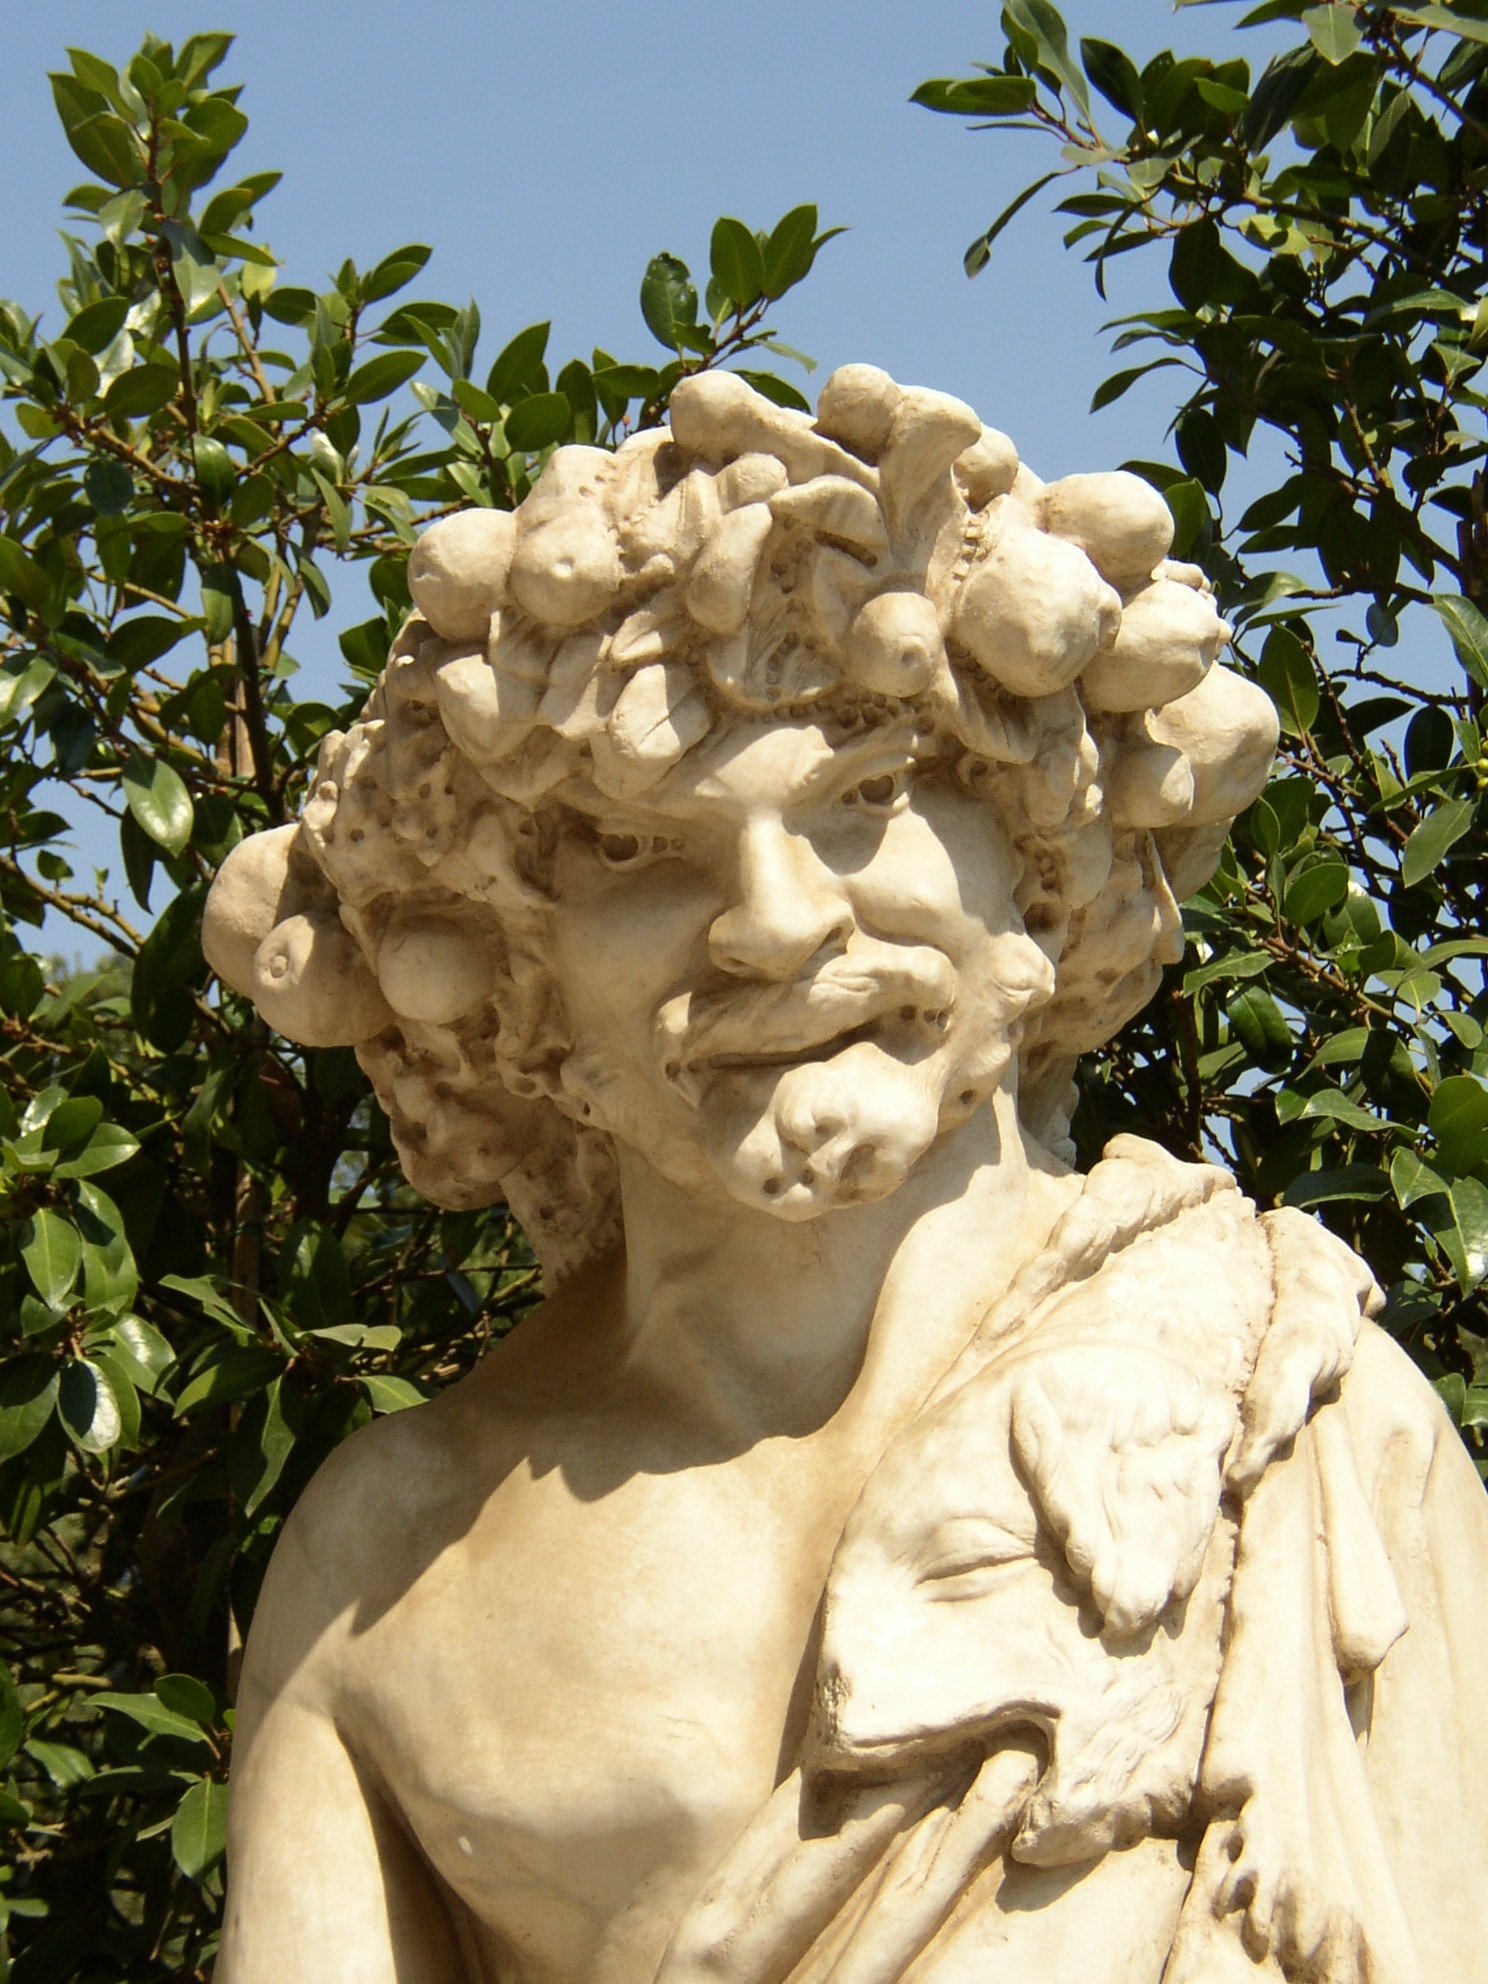 man statue beside green leaf plant